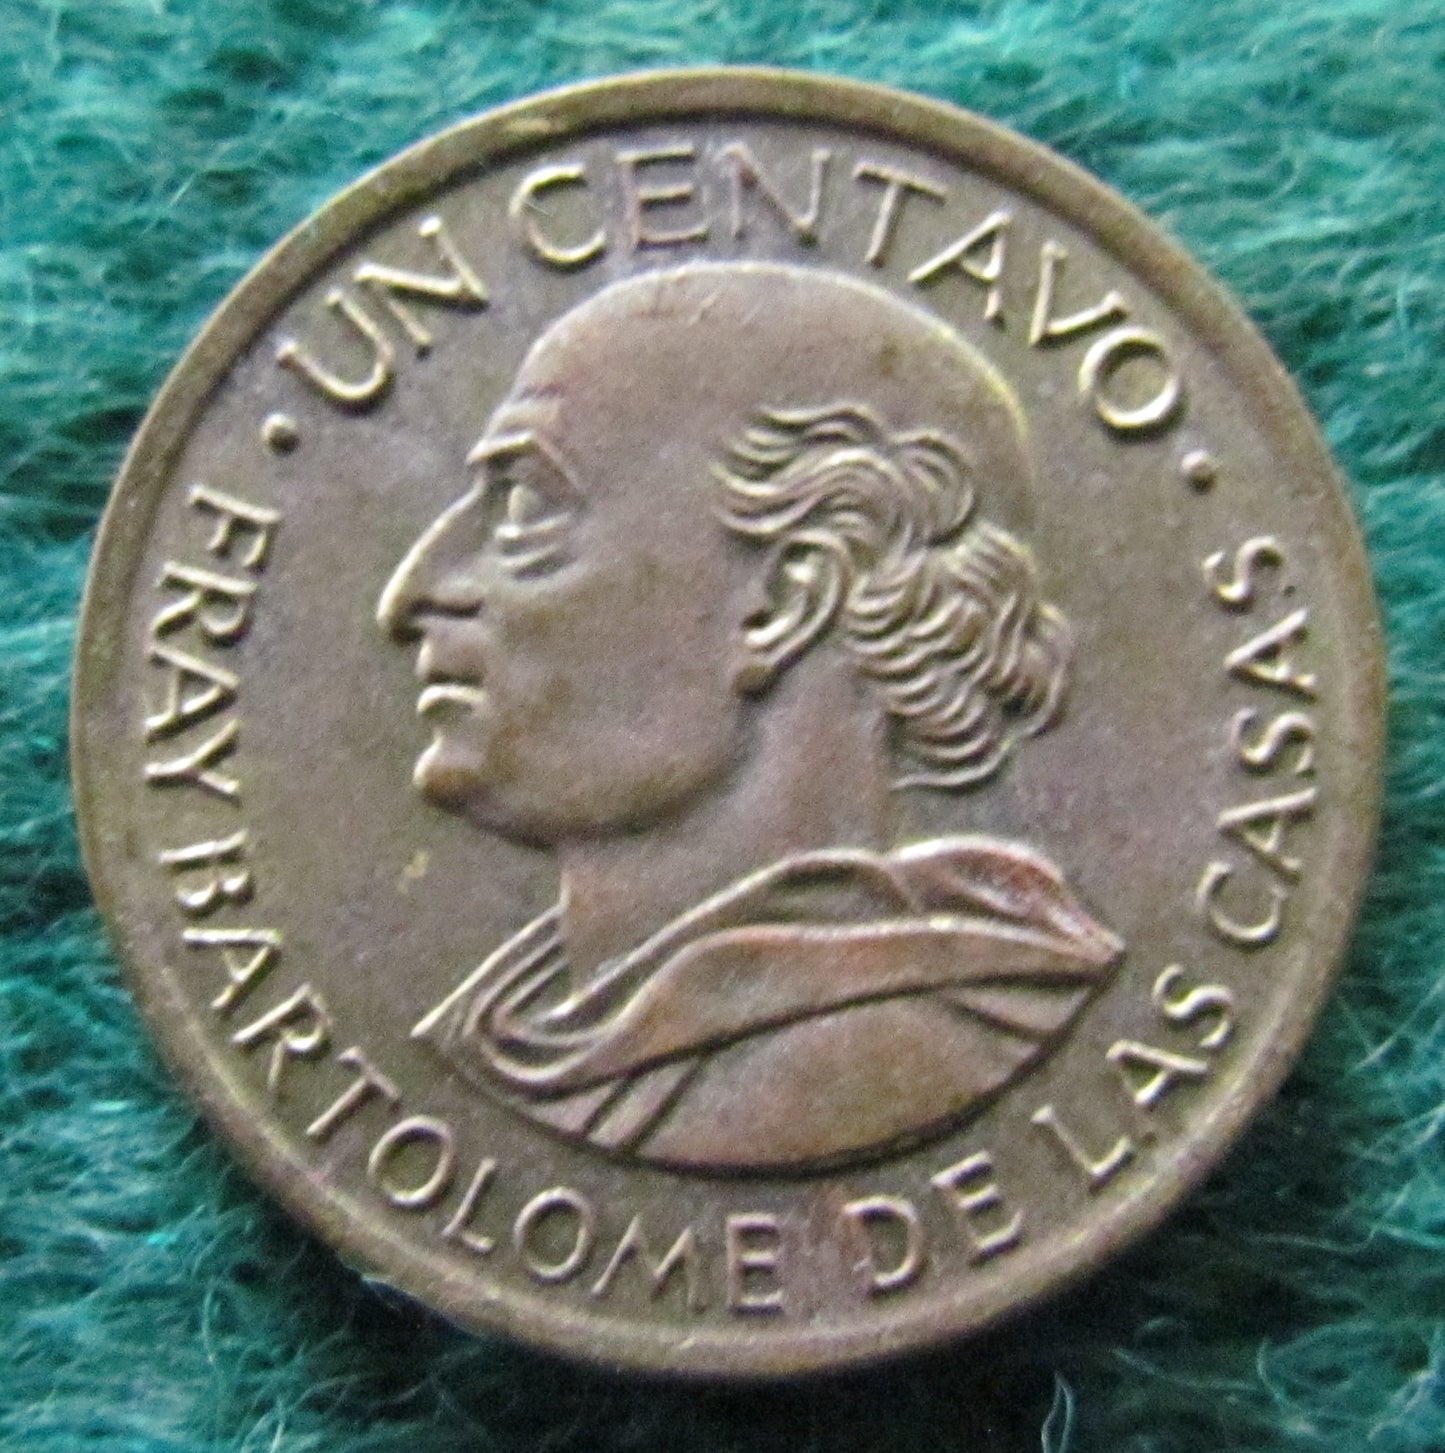 Guatemala 1965 1 Centavo Coin - Circulated